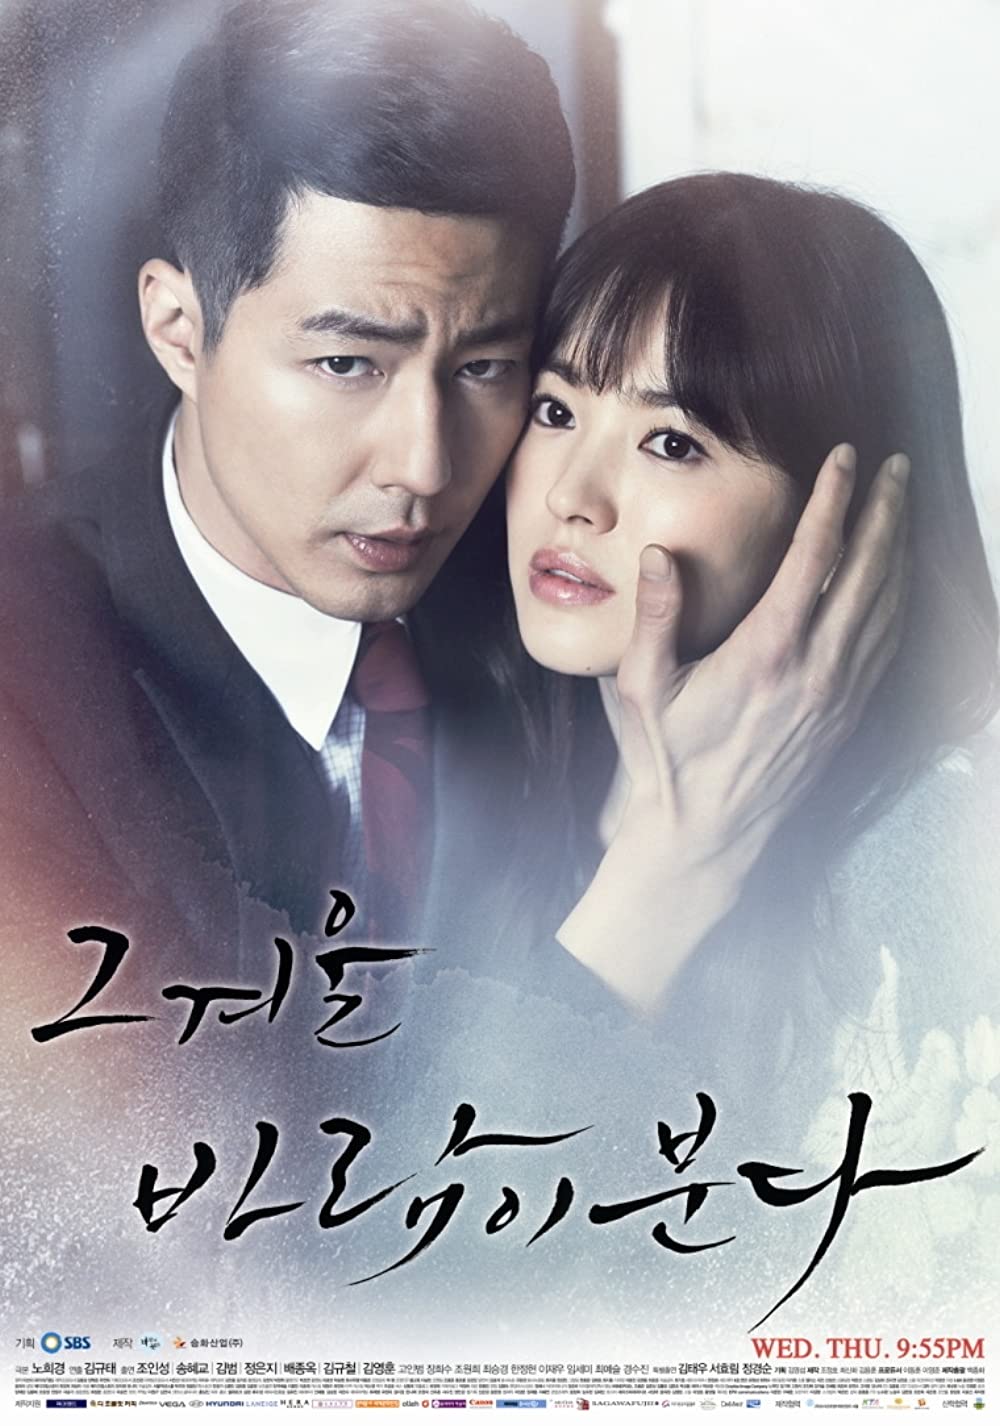 7 Rekomendasi drama Korea cewek kaya raya, bikin jiwa miskin menjerit